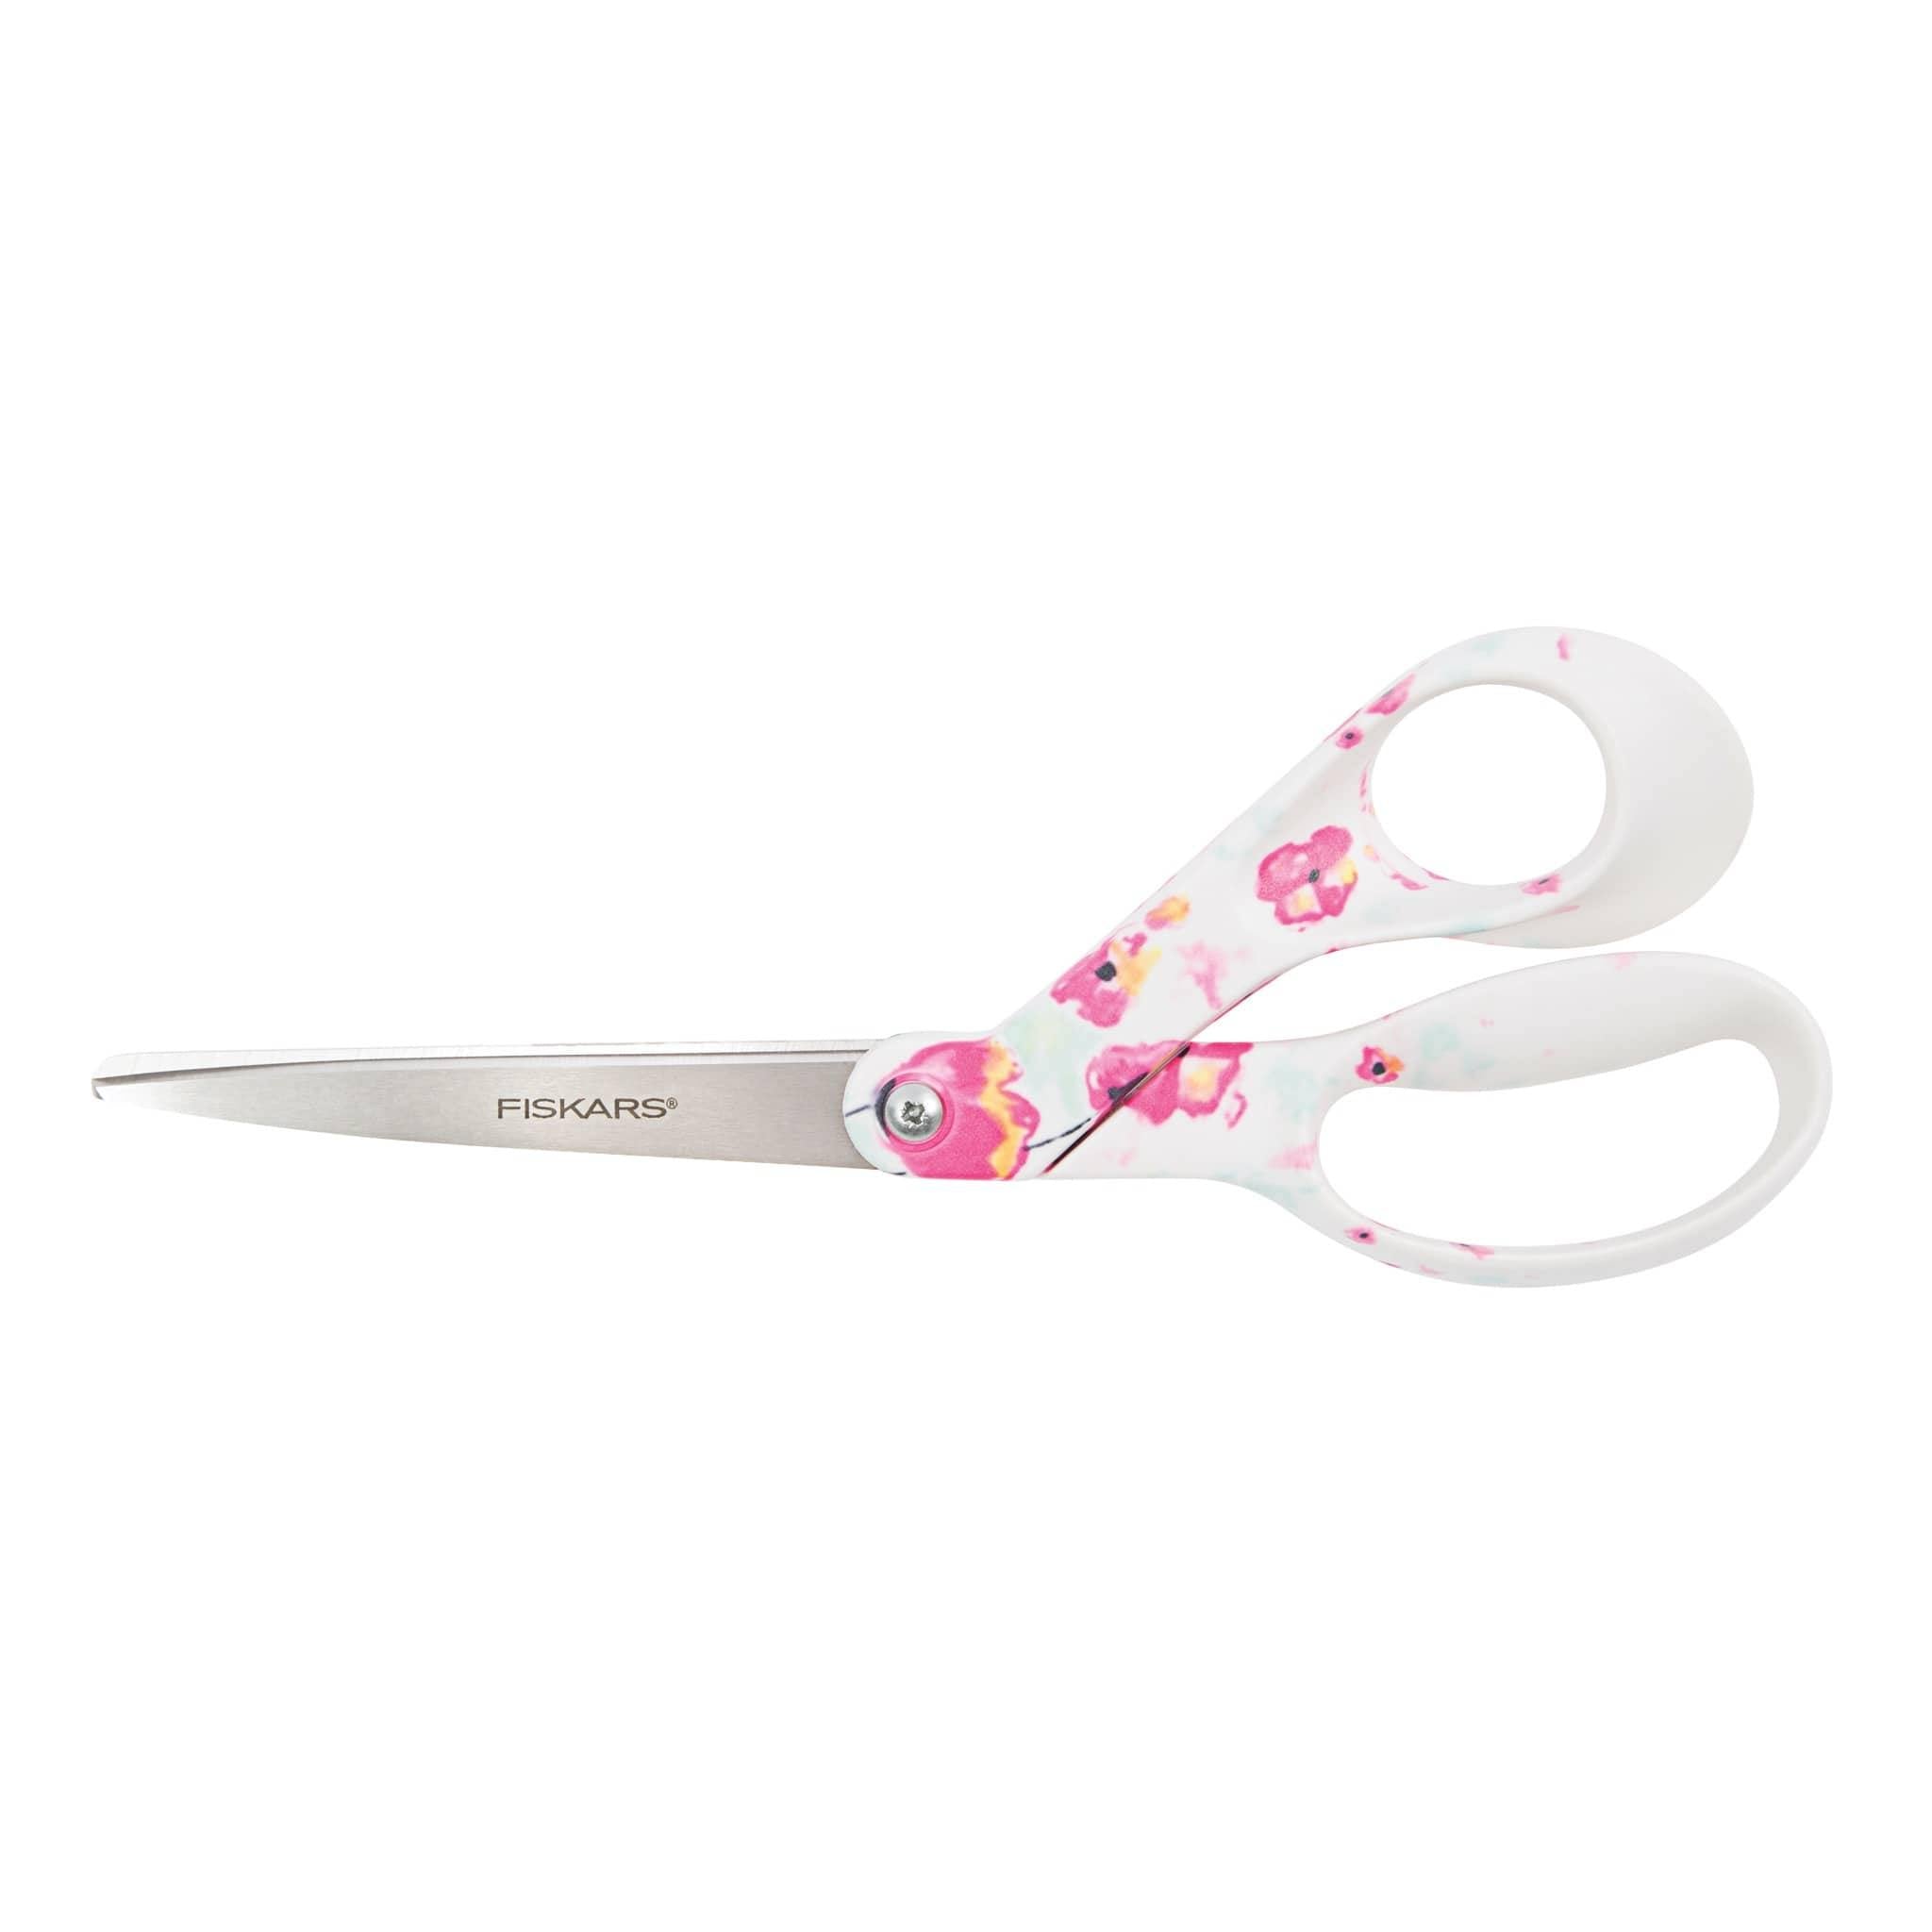 Fiskars Inspiration Floral General Purpose Scissors (21cm)